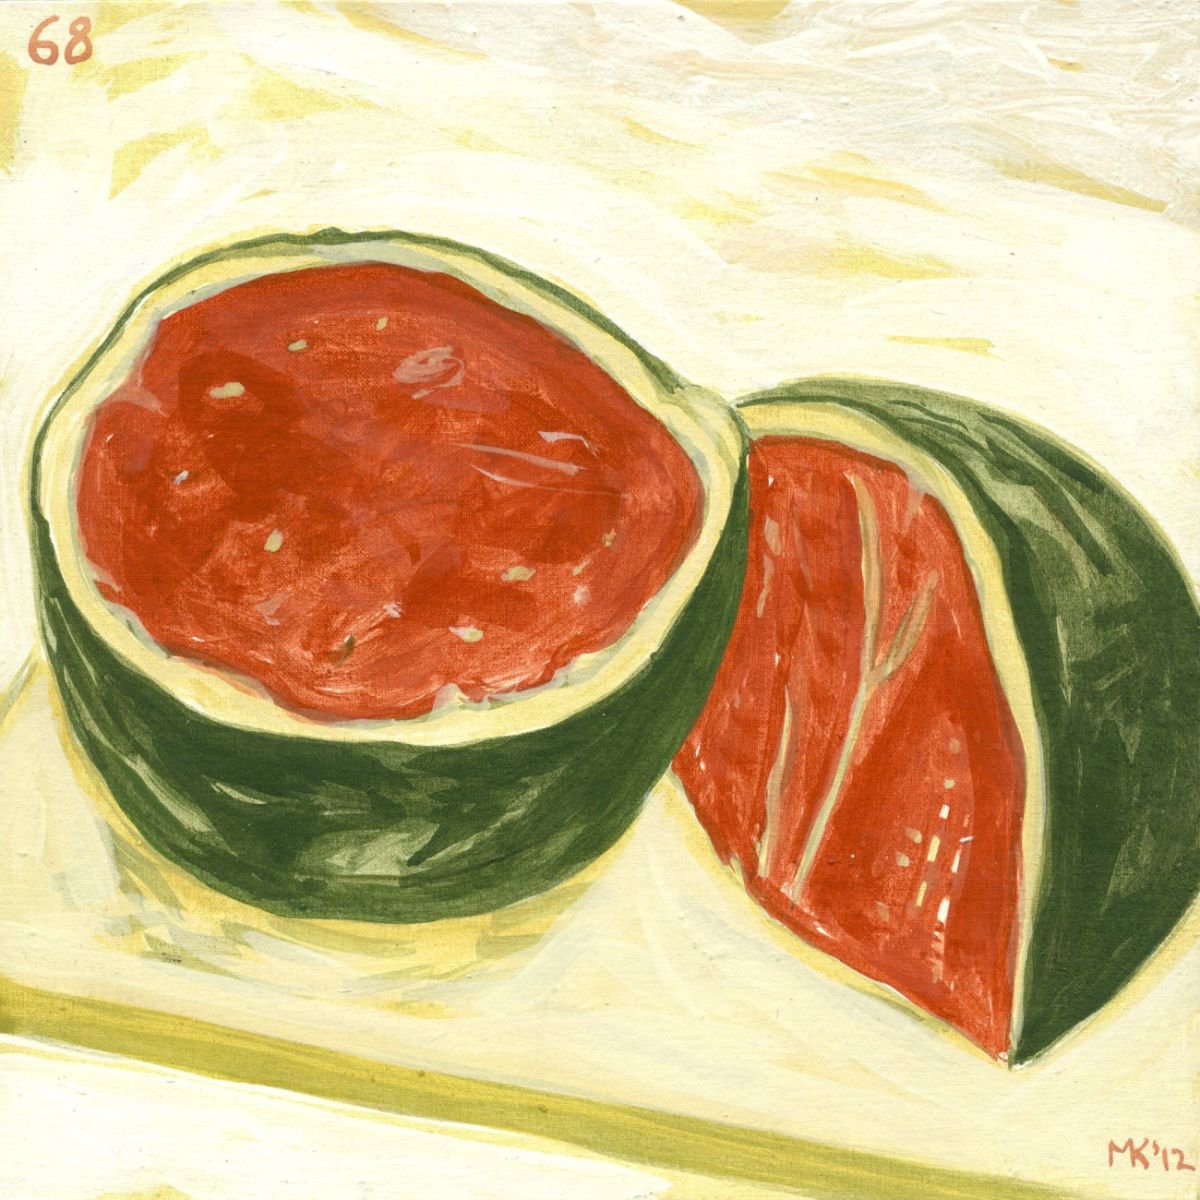 Day 68, water melon by Markos Kampanis